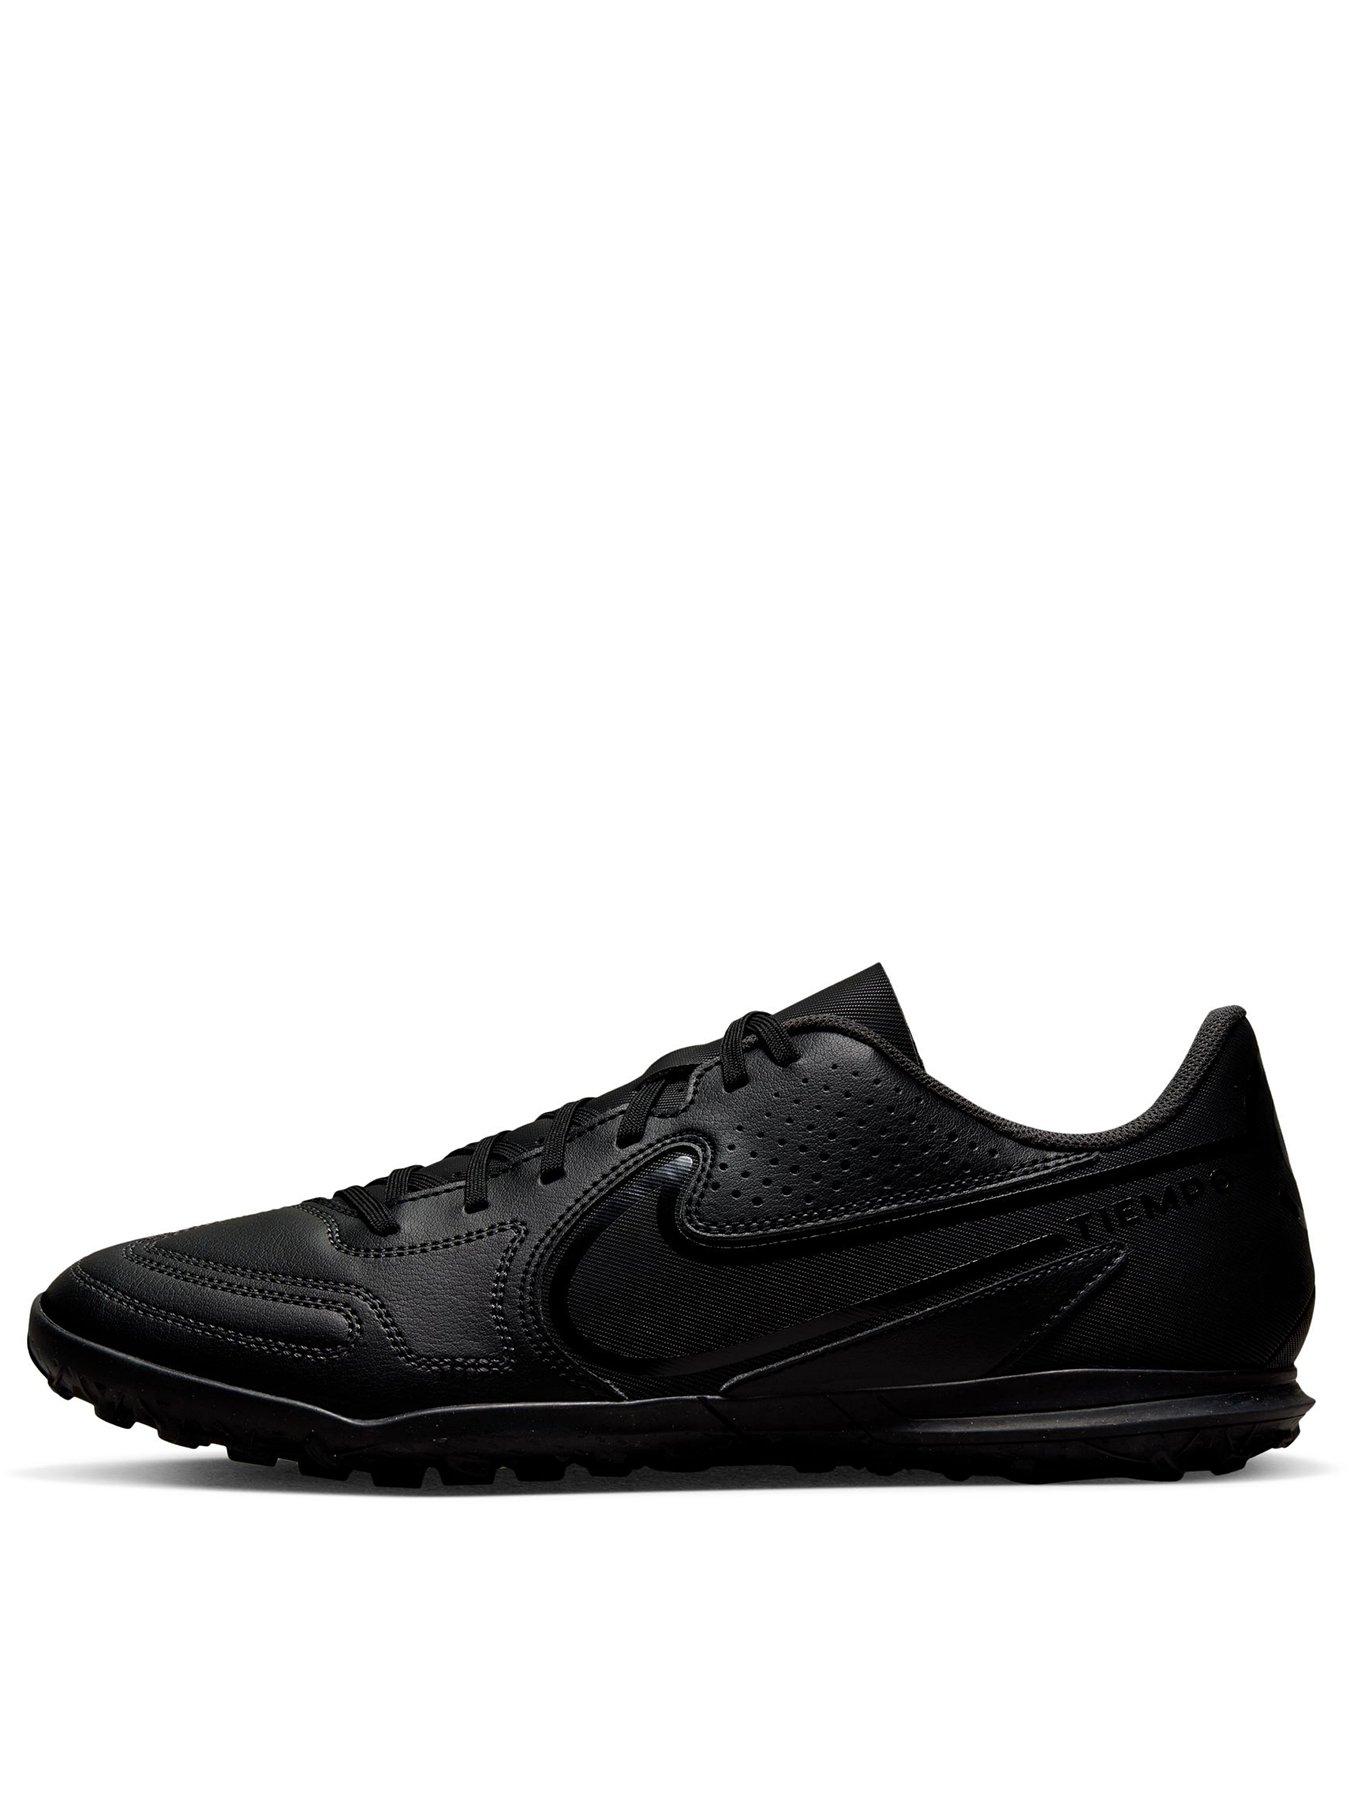 Nike Mens Tiempo 9 Club Astro Turf Football Boots - Black | very.co.uk